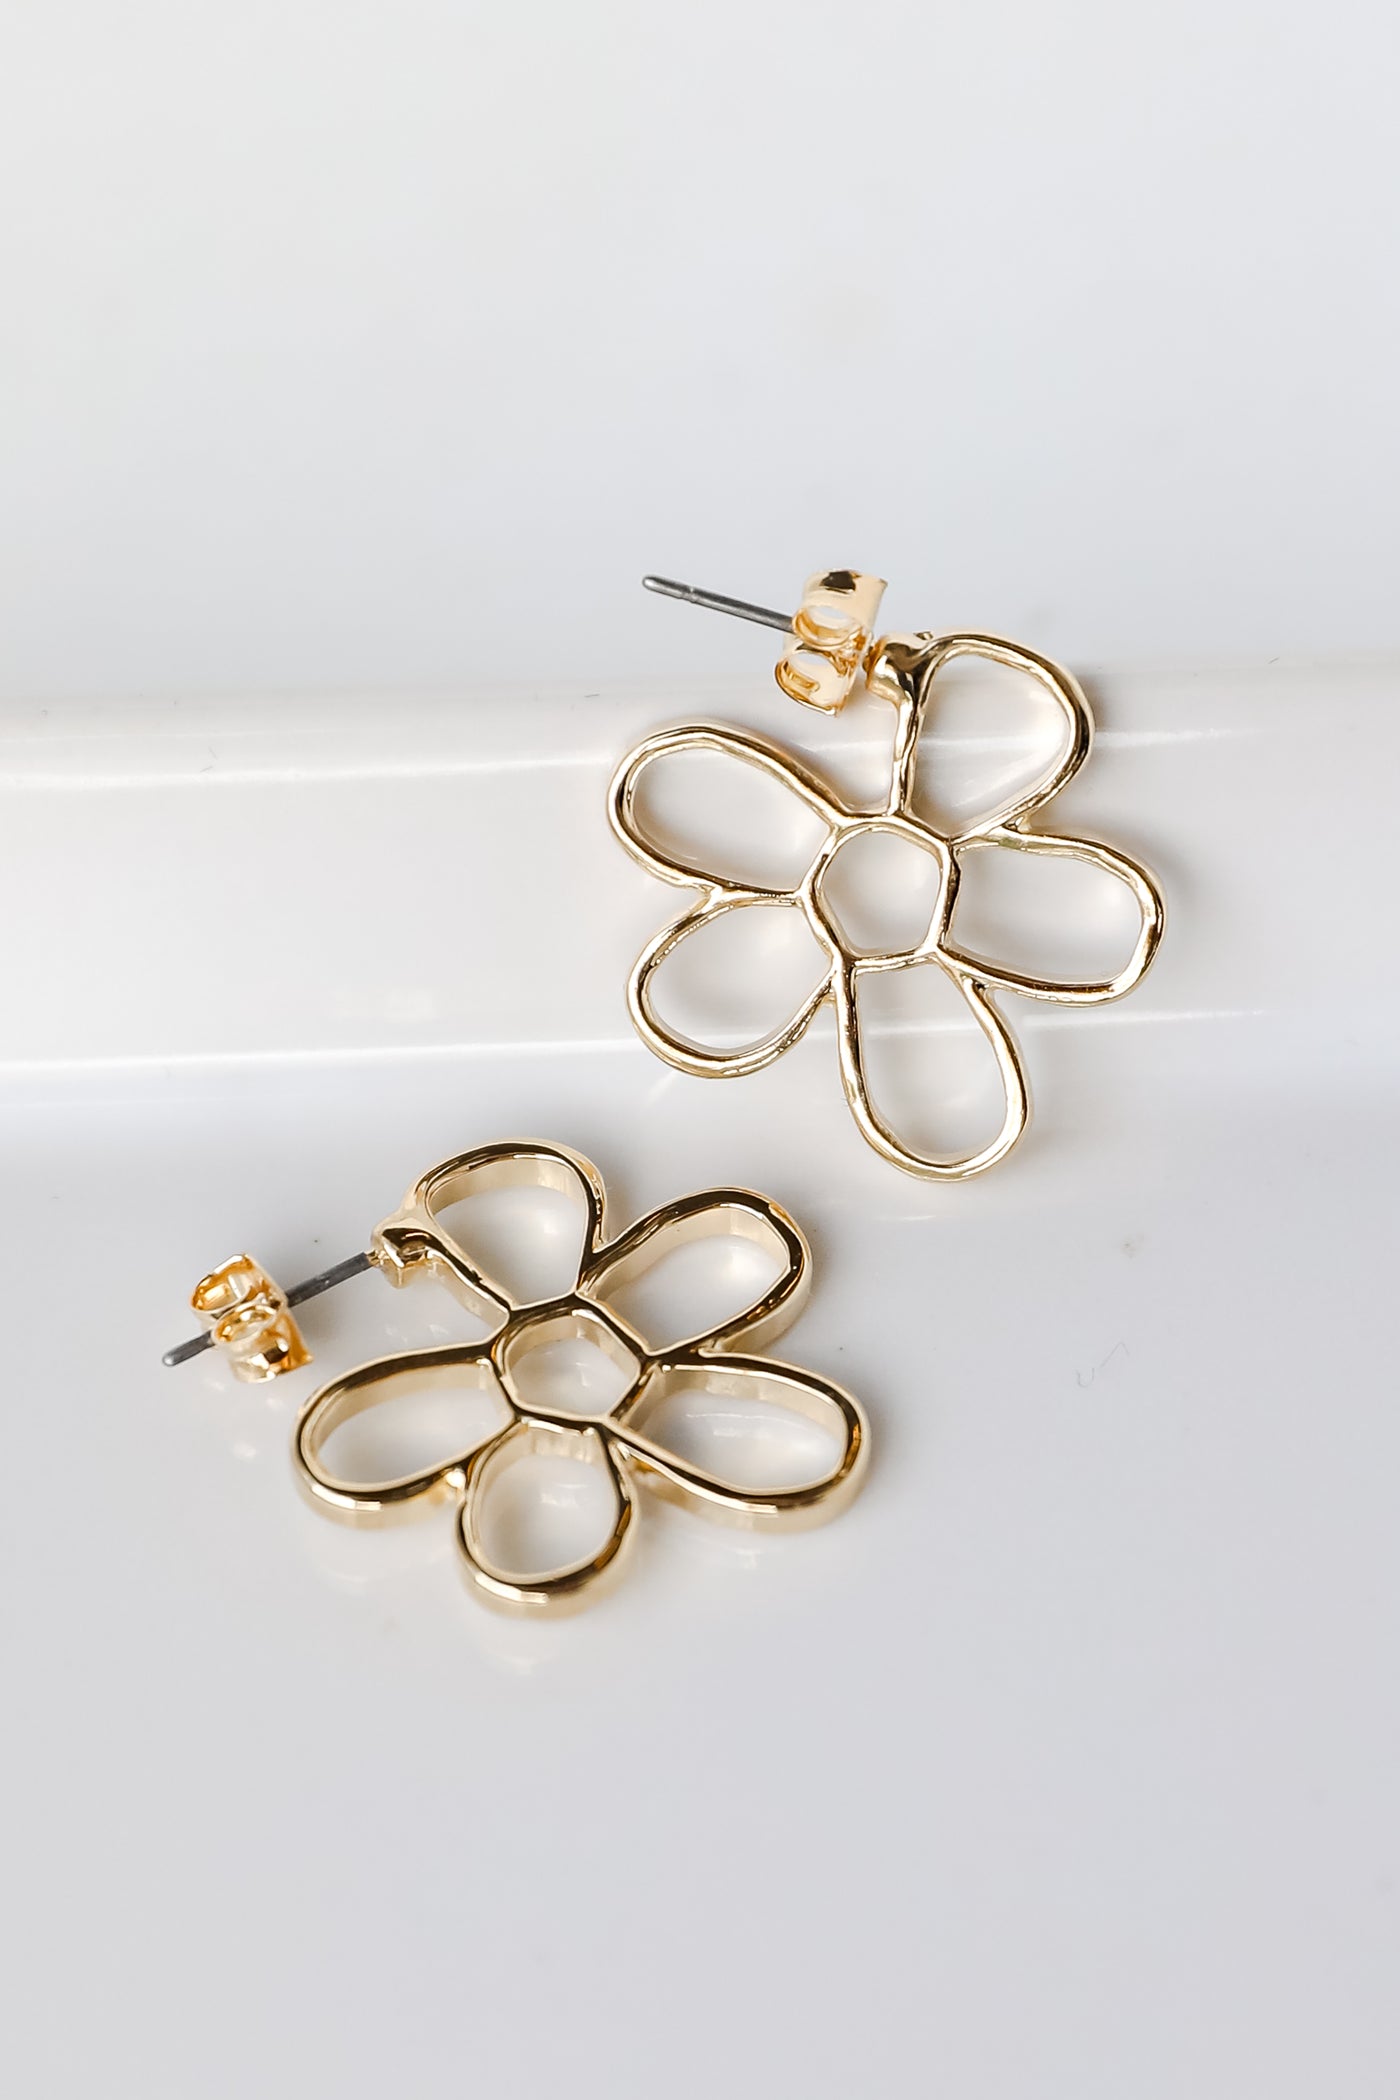 Caroline Gold Flower Earrings